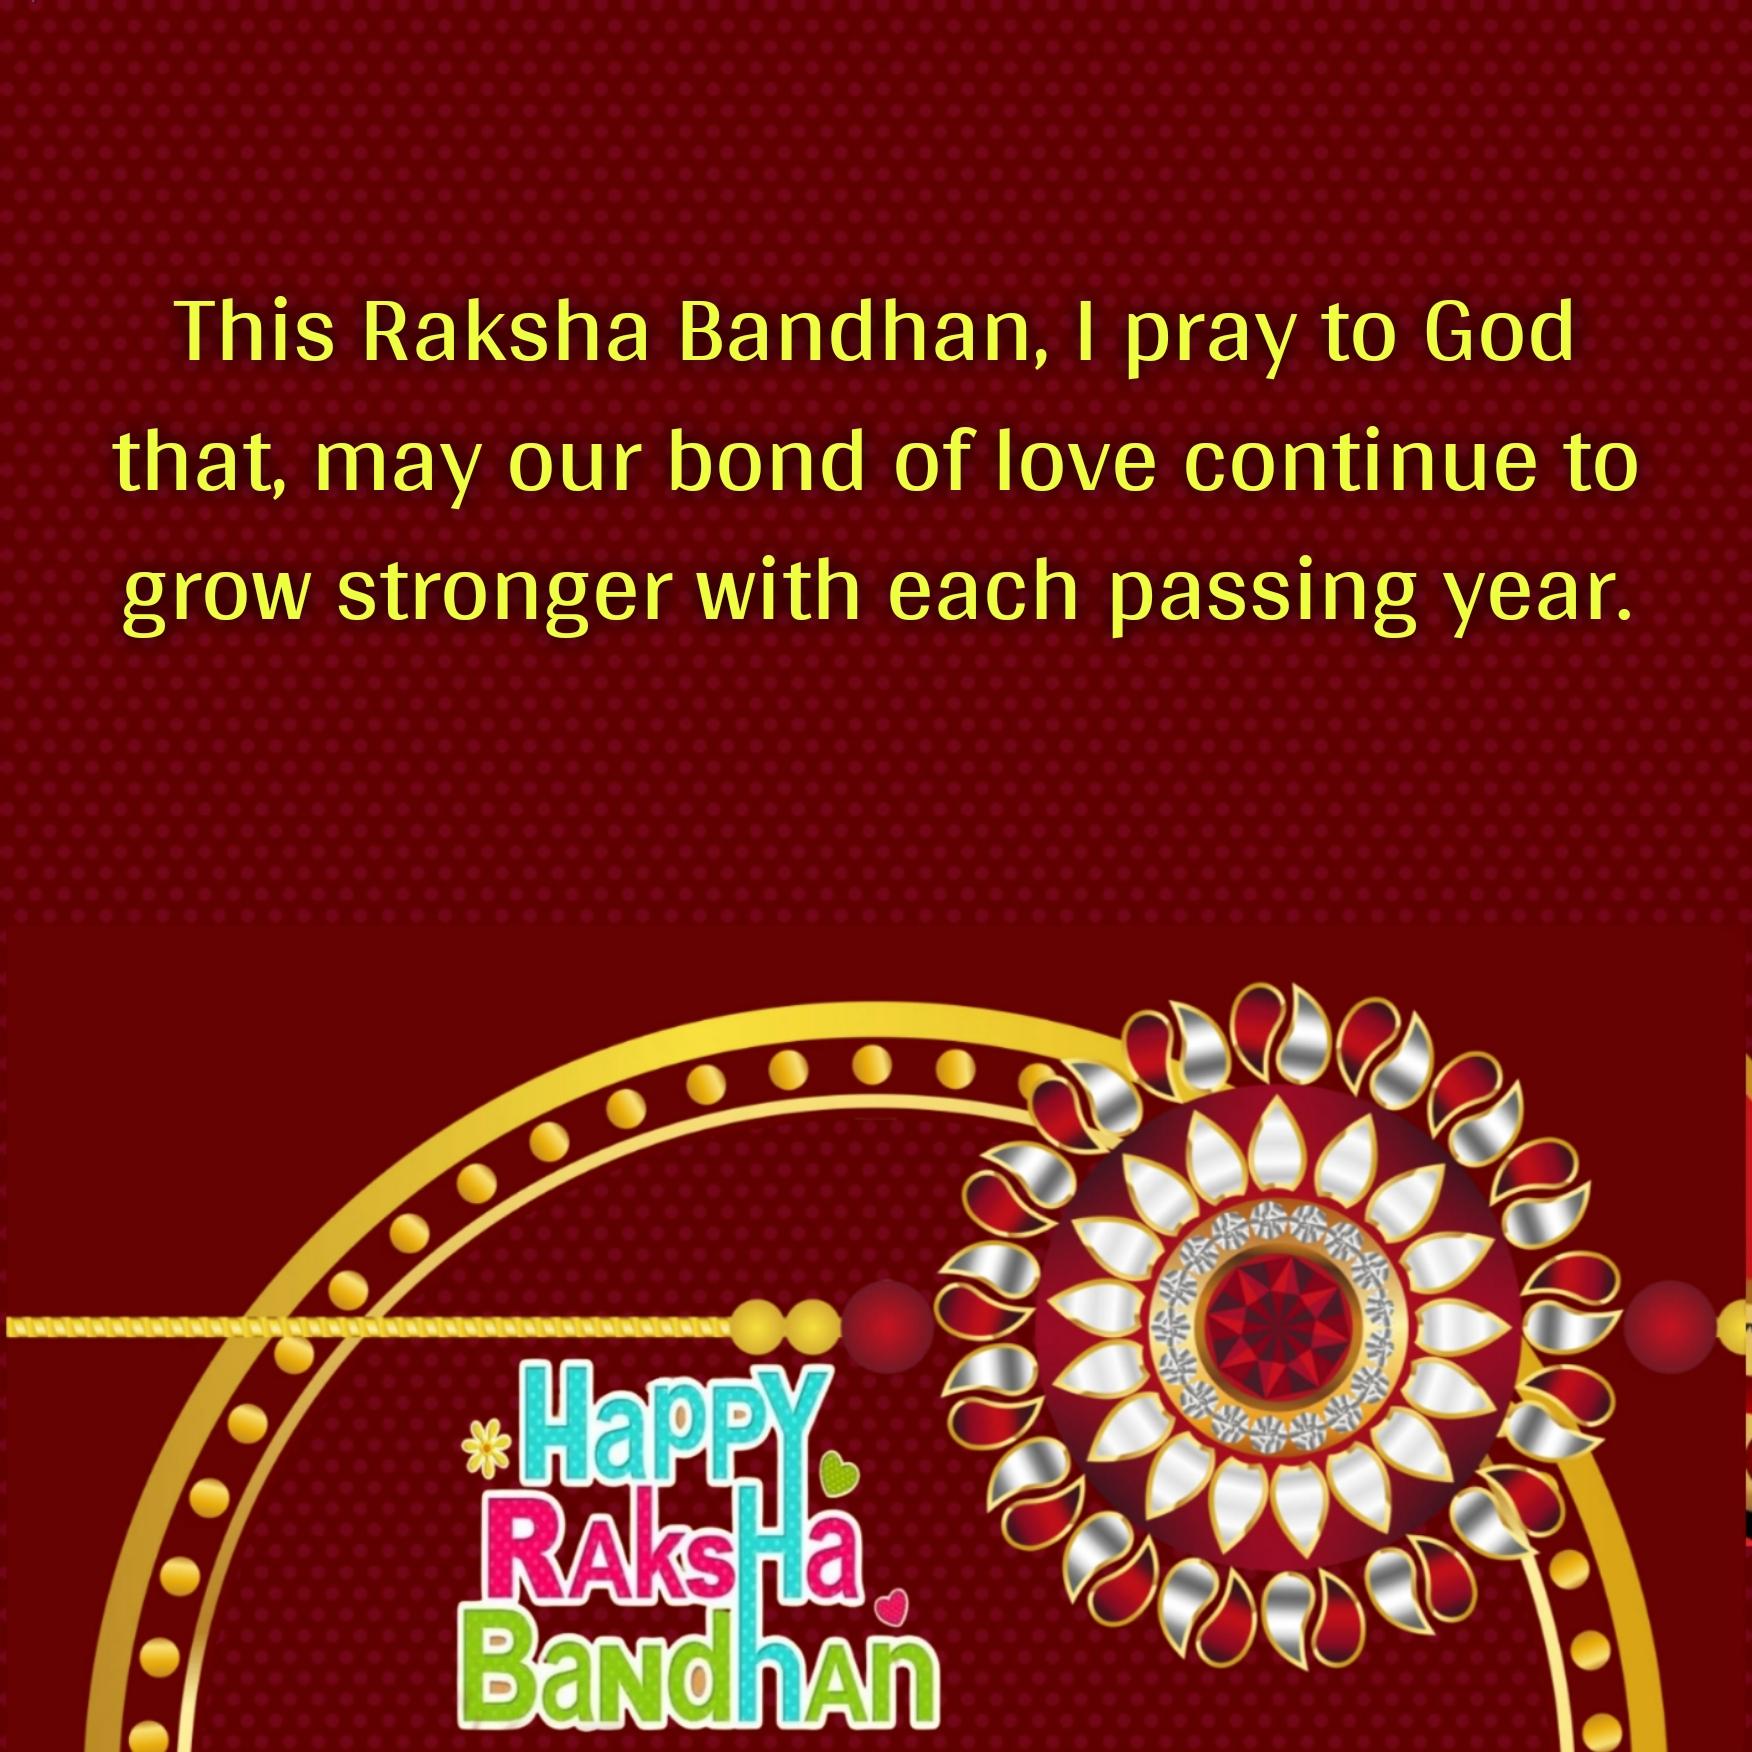 This Raksha Bandhan I pray to God that may our bond of love